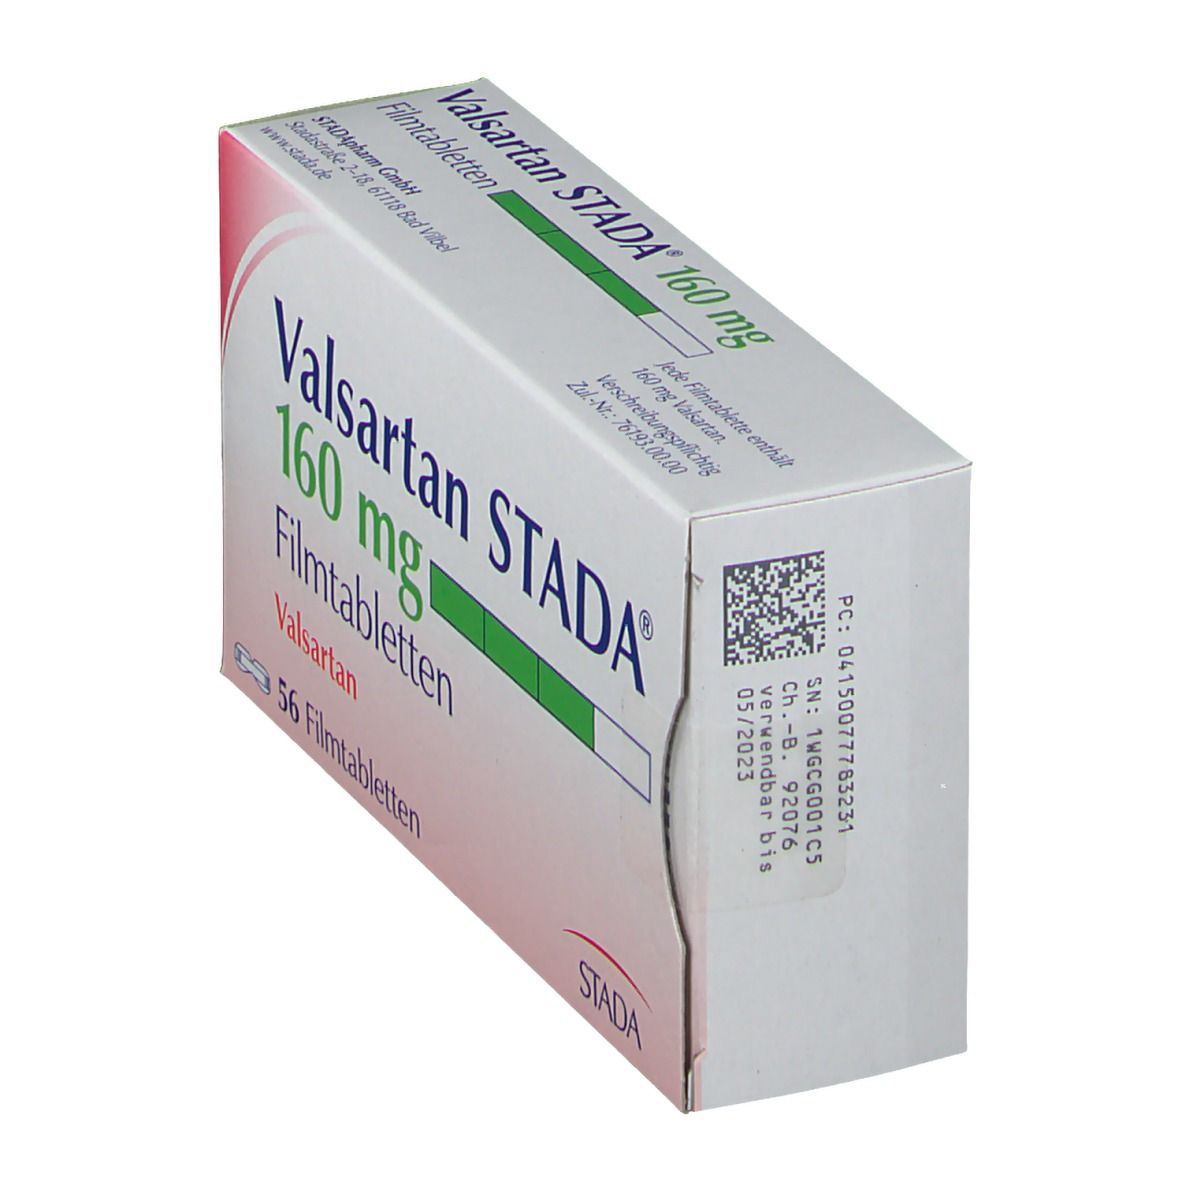 Valsartan STADA® 160 mg